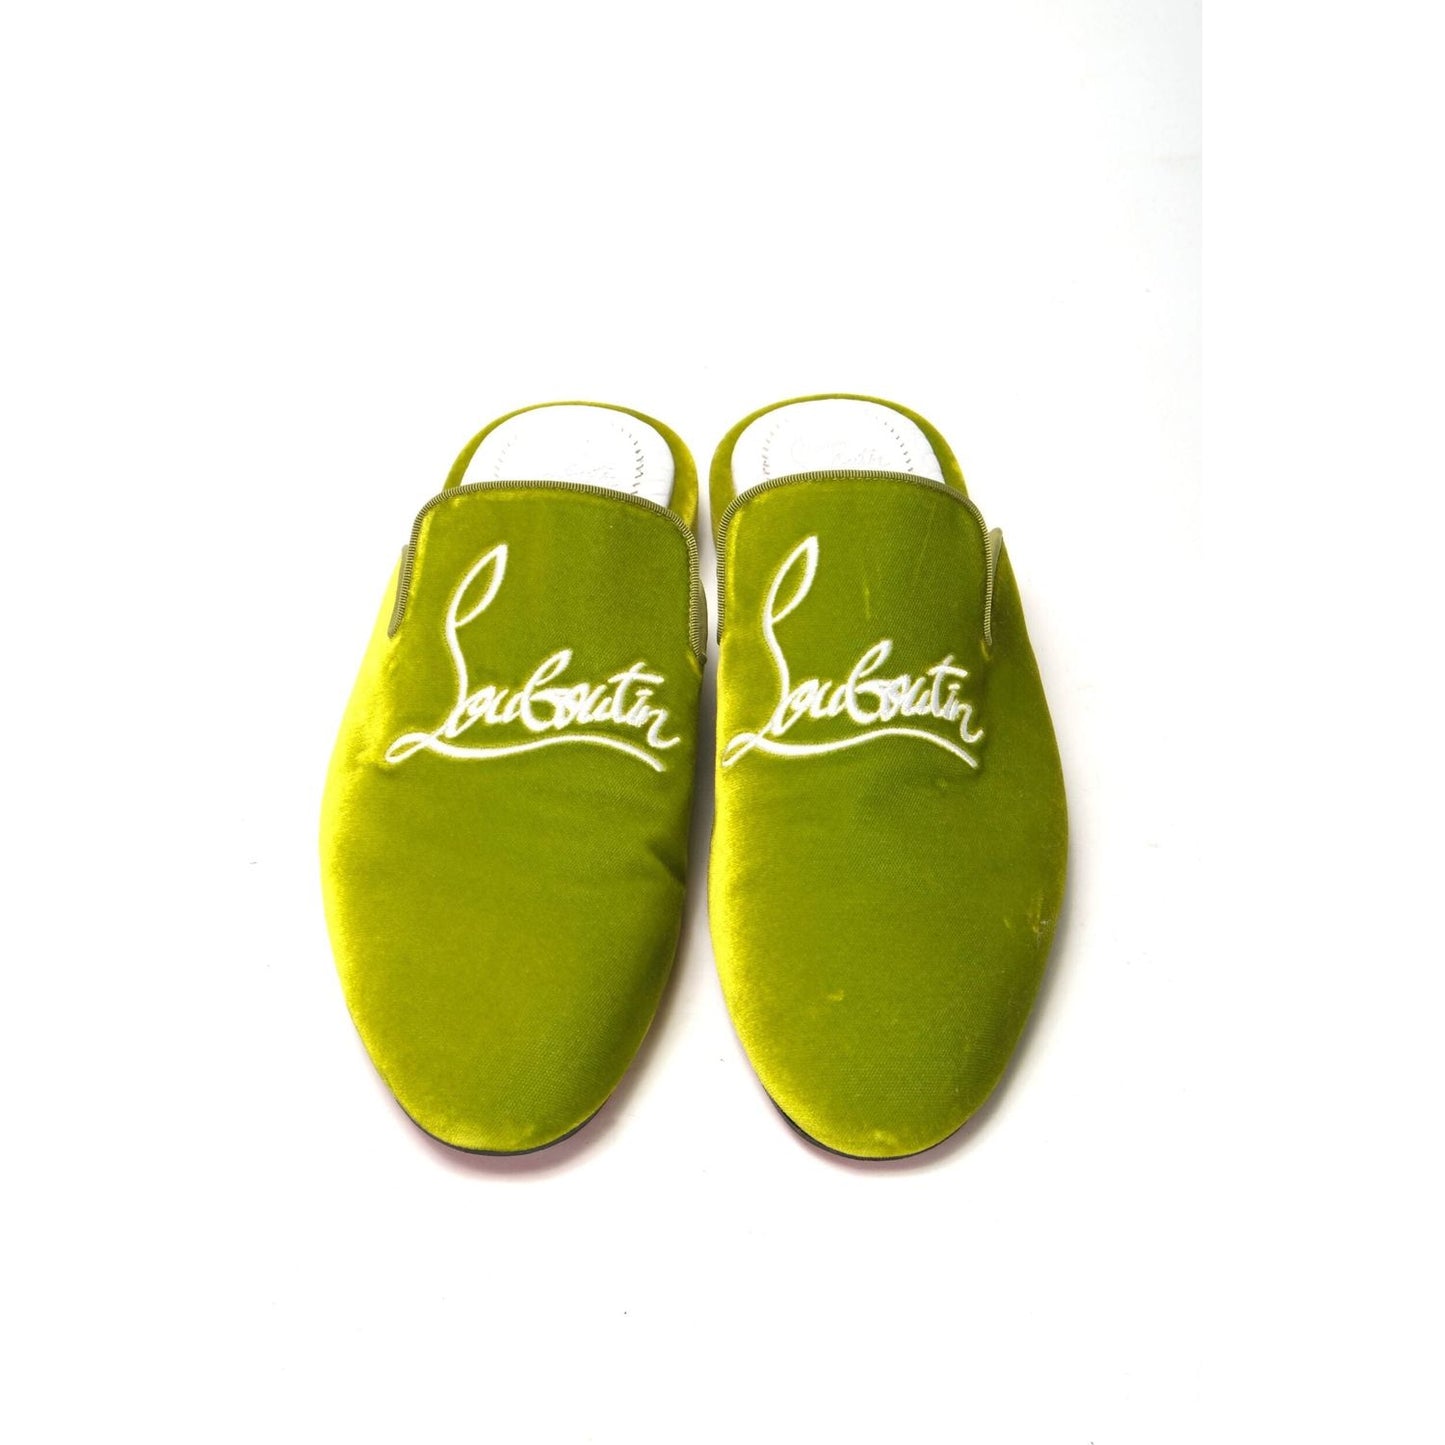 Christian Louboutin Bourgeon Lime Navy Coolito Flat Shoes bourgeon-lime-navy-coolito-flat-shoes